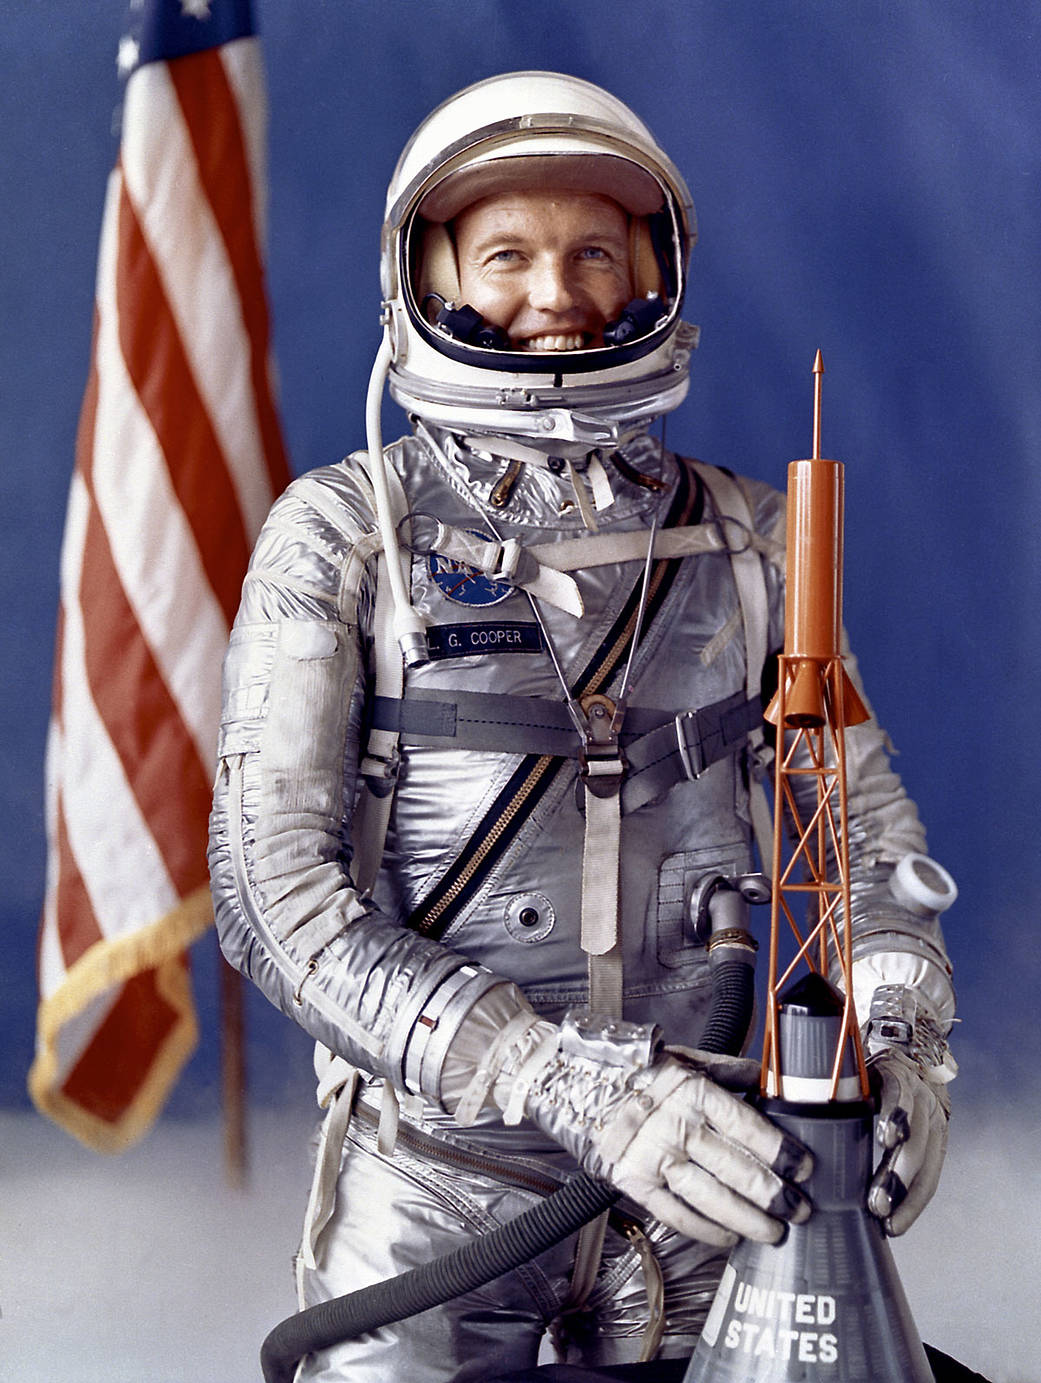 Official portrait of Mercury astronaut Gordon Cooper